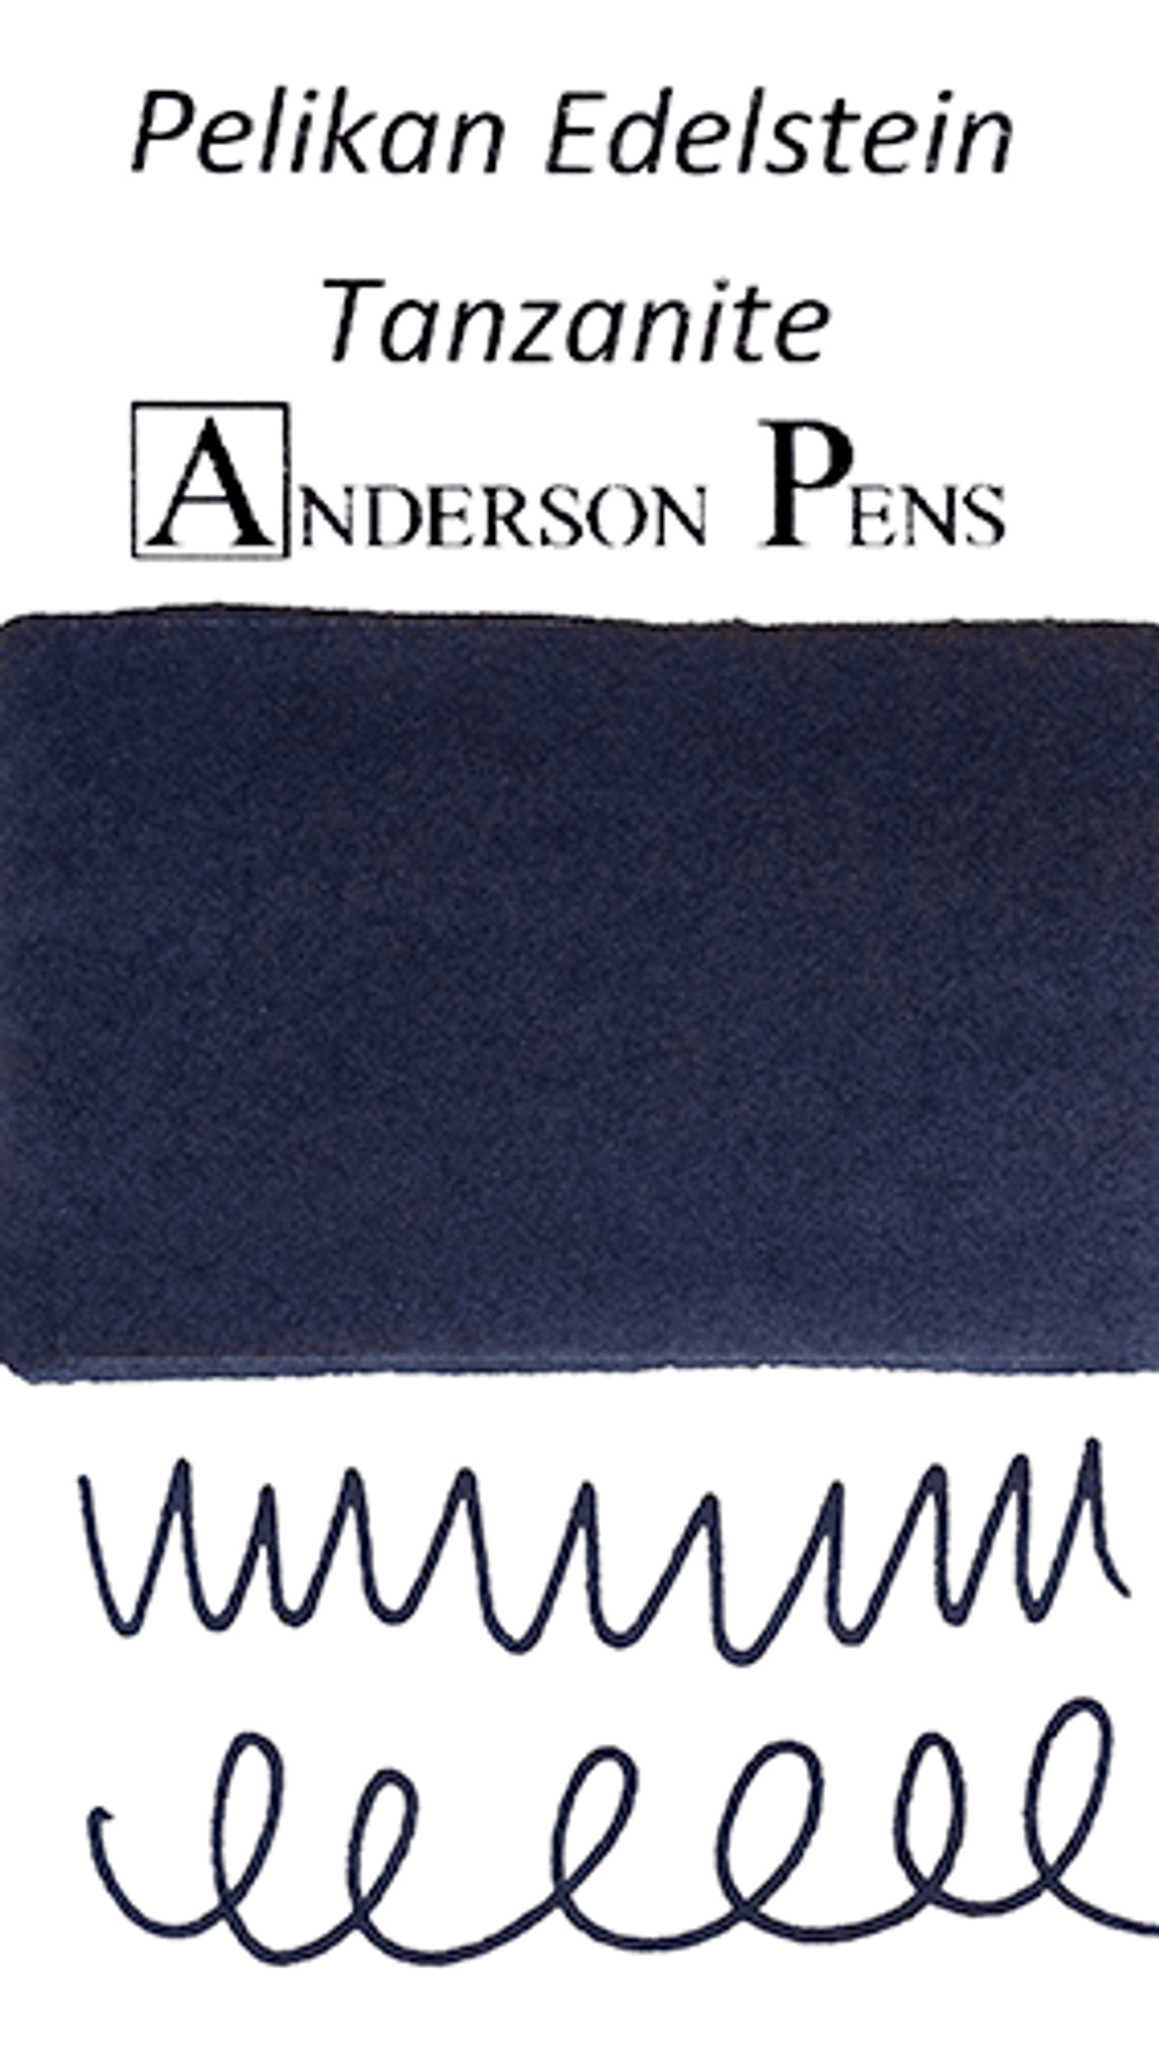 Pelikan Edelstein Tanzanite Ink Sample (3ml Vial) - Anderson Pens, Inc.